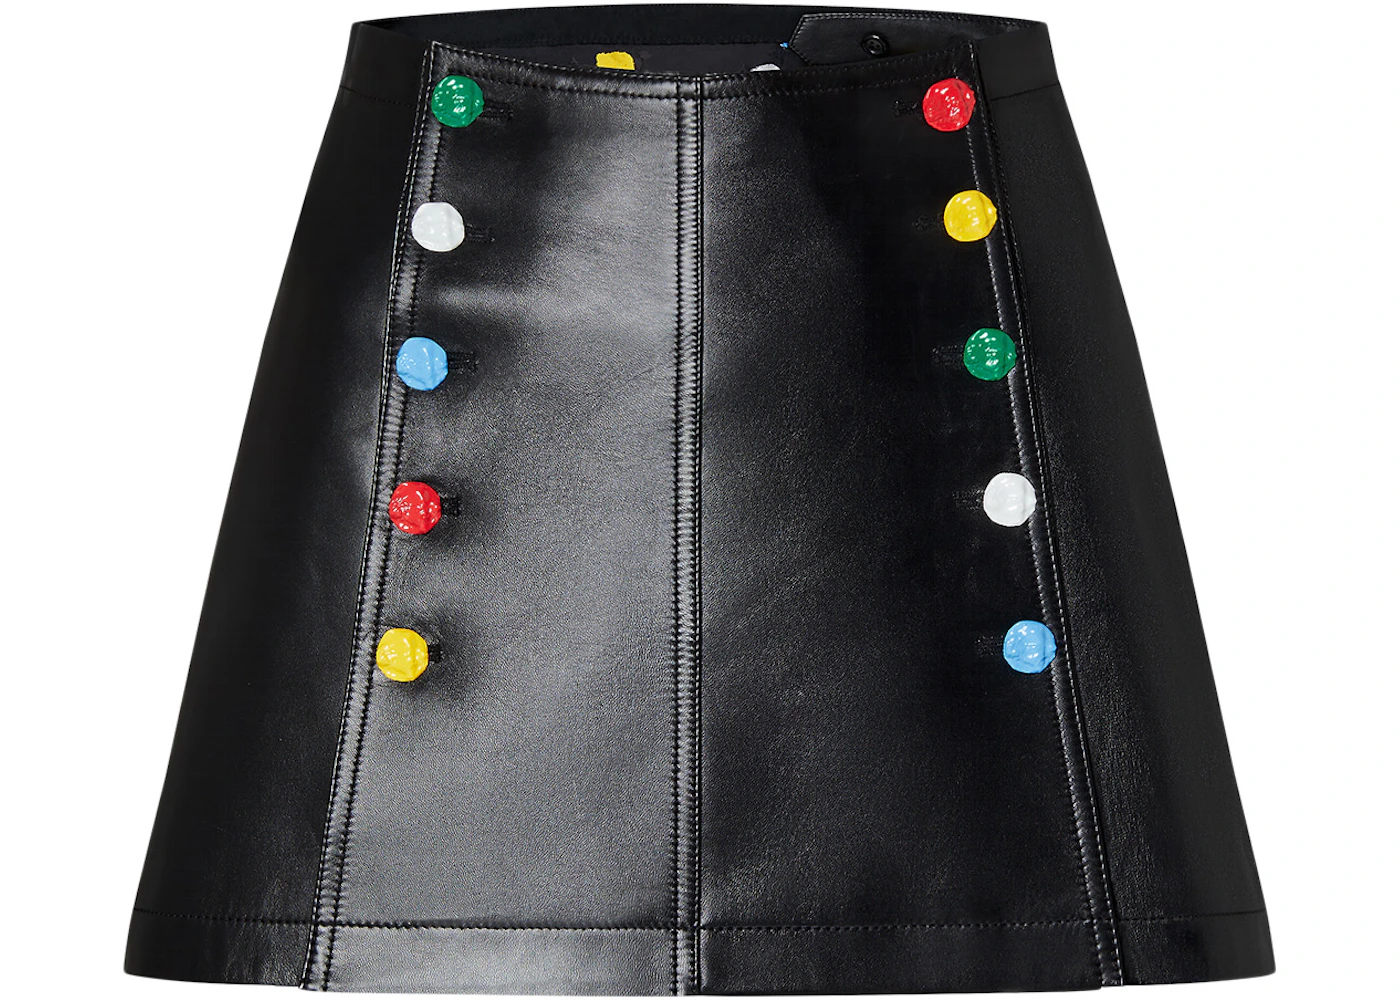 leather louis vuitton skirt